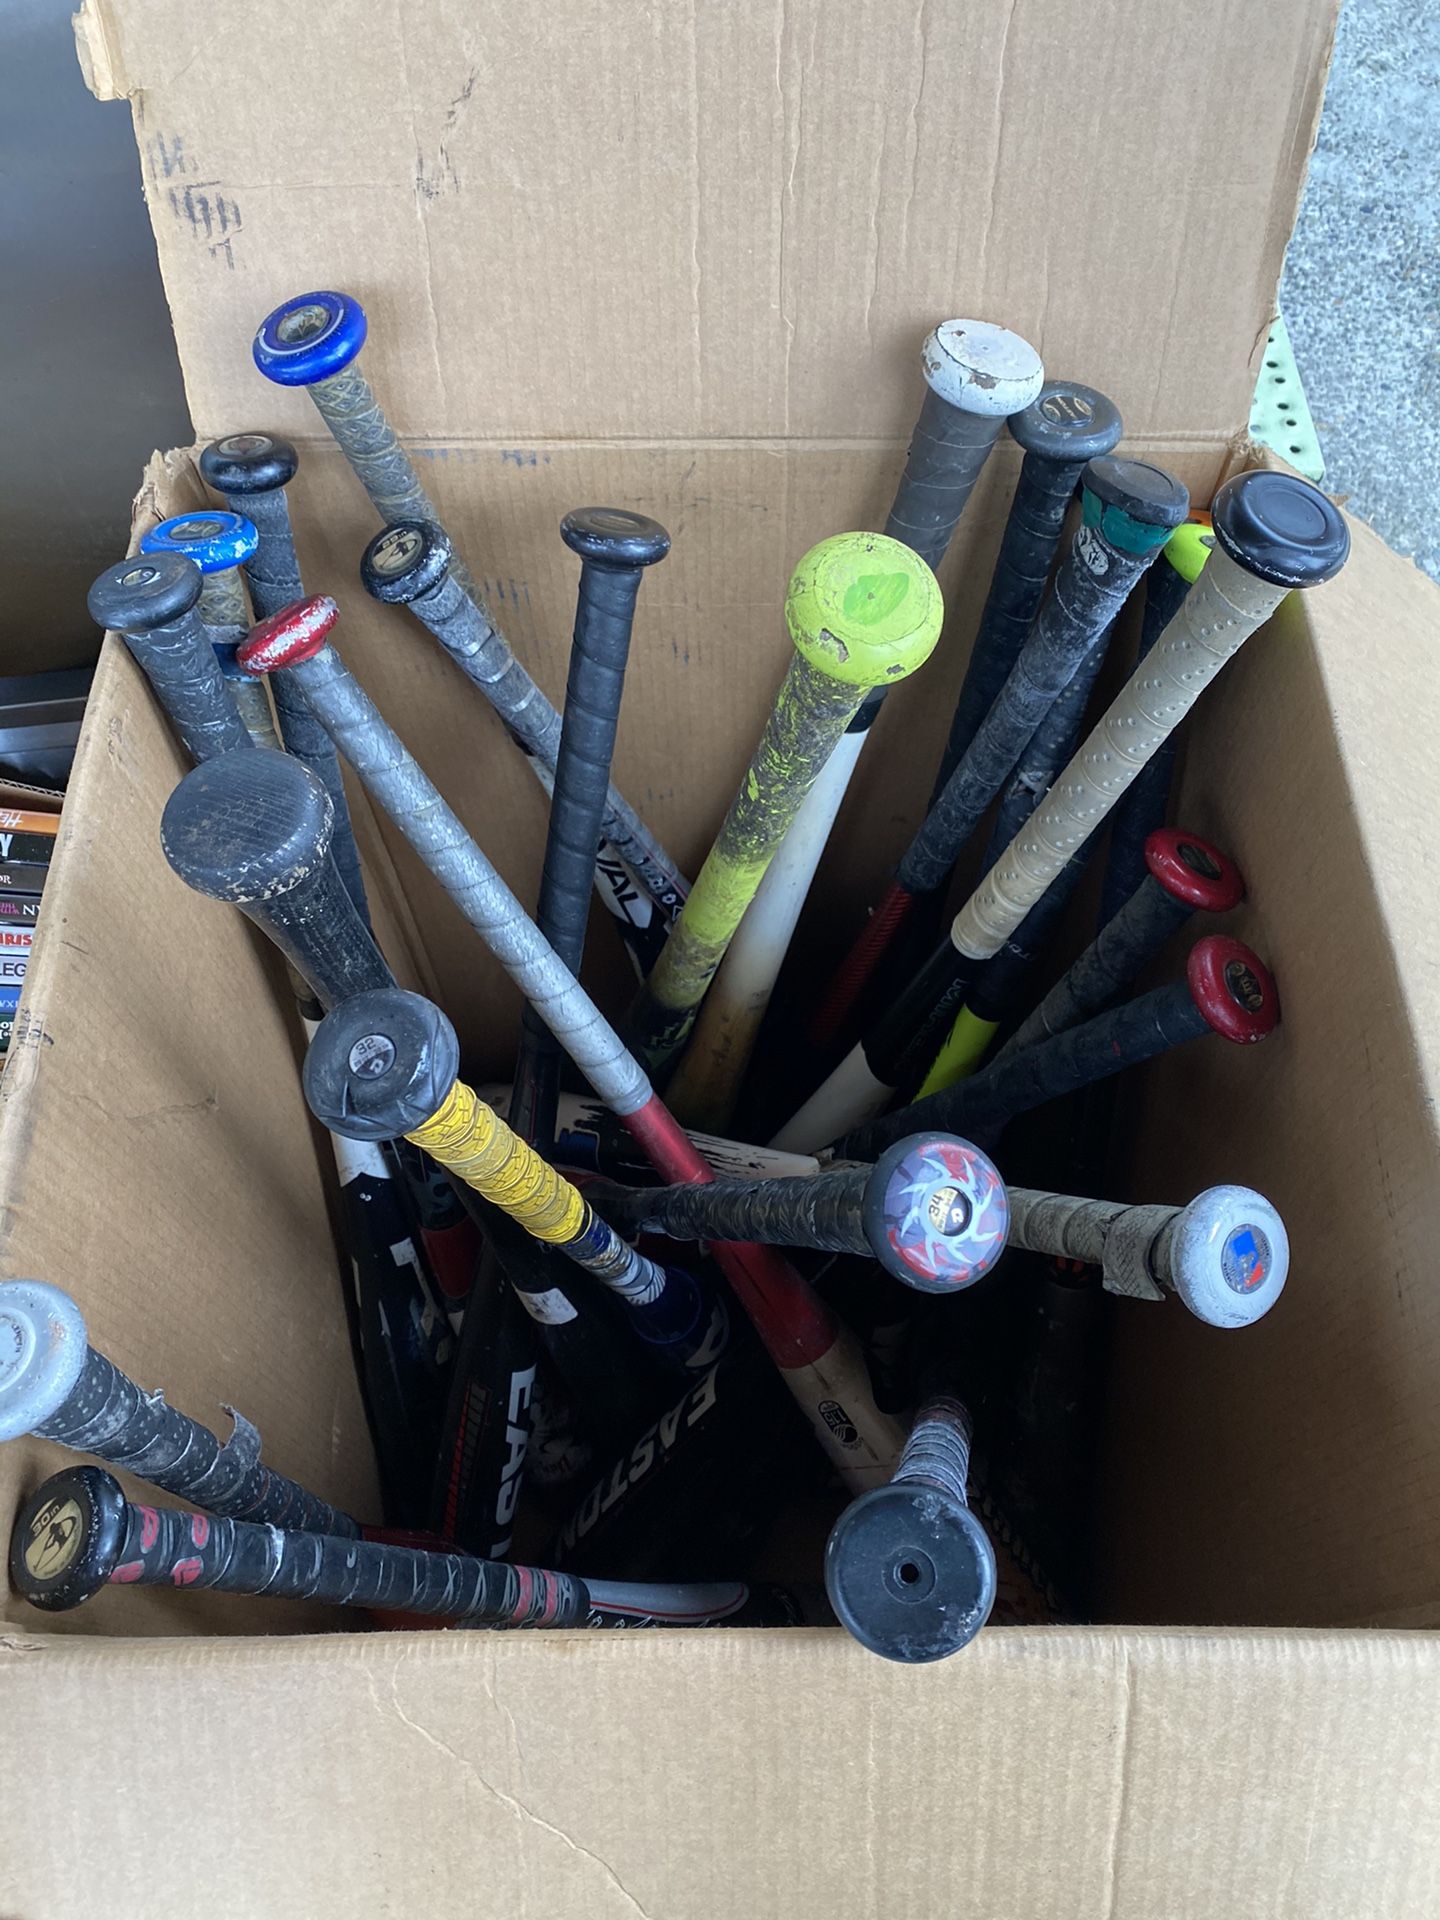 Bundle of baseball bats